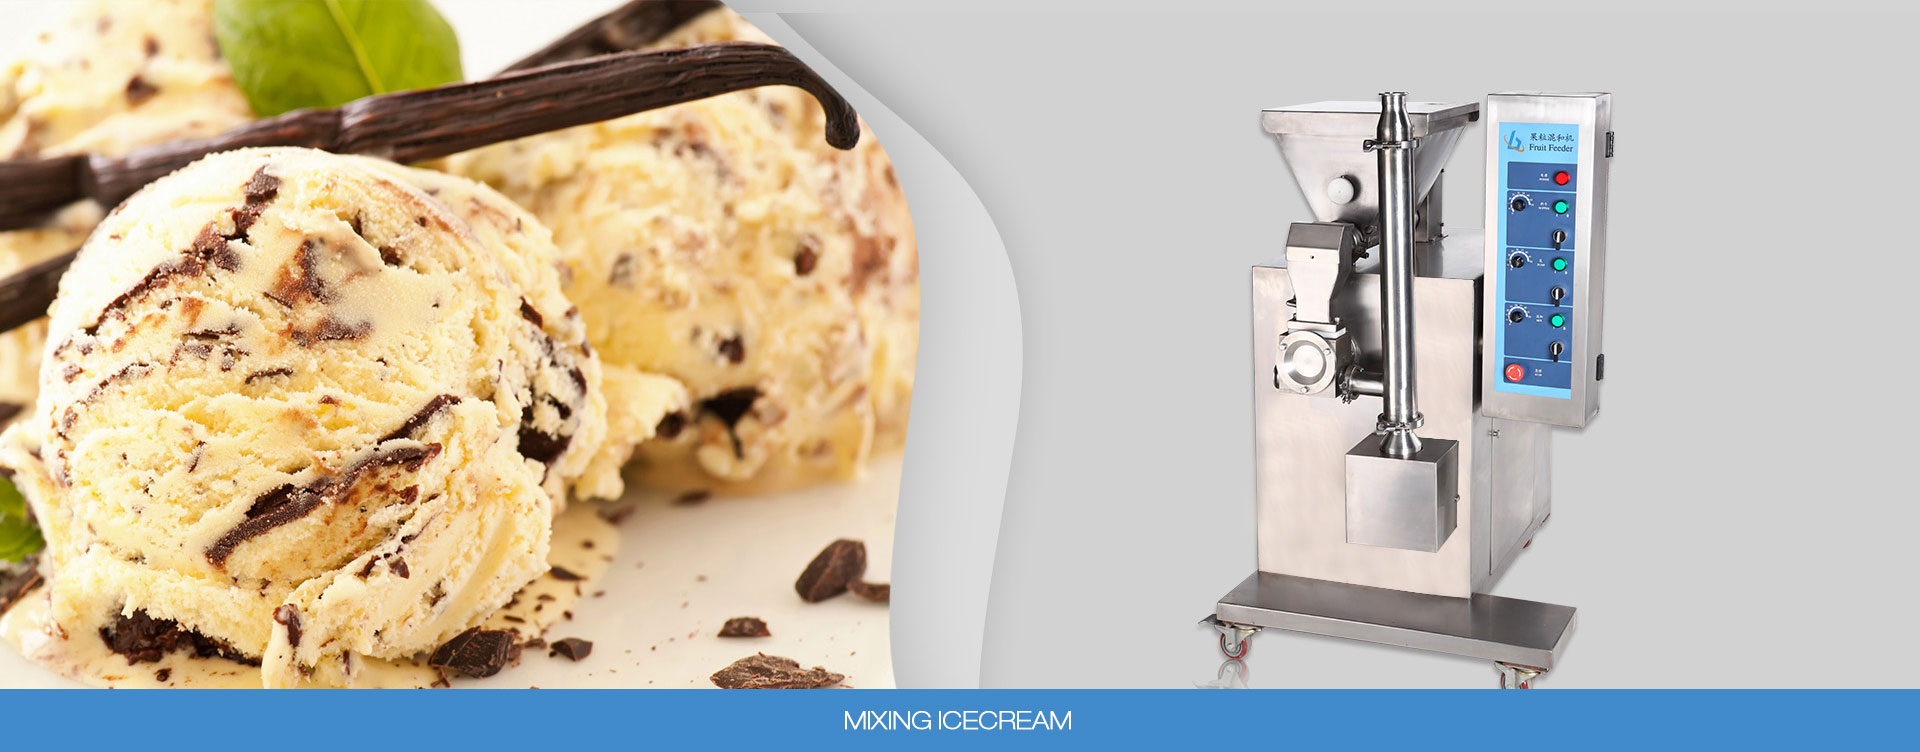 How to make ice cream with an ice cream machine